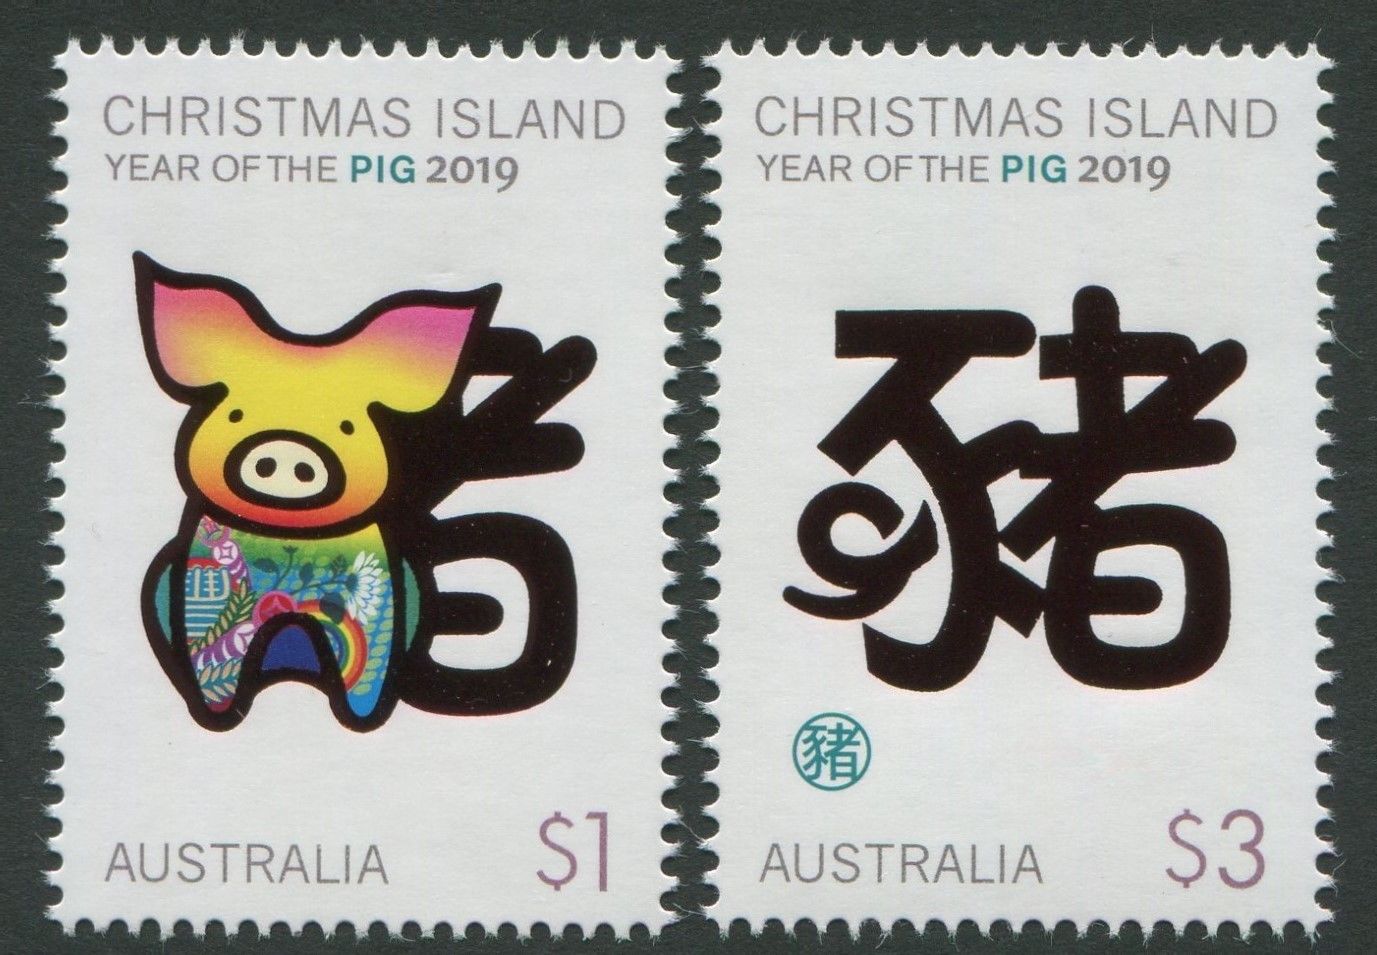 Christmas Island - Year of the Pig (January 8, 2019)